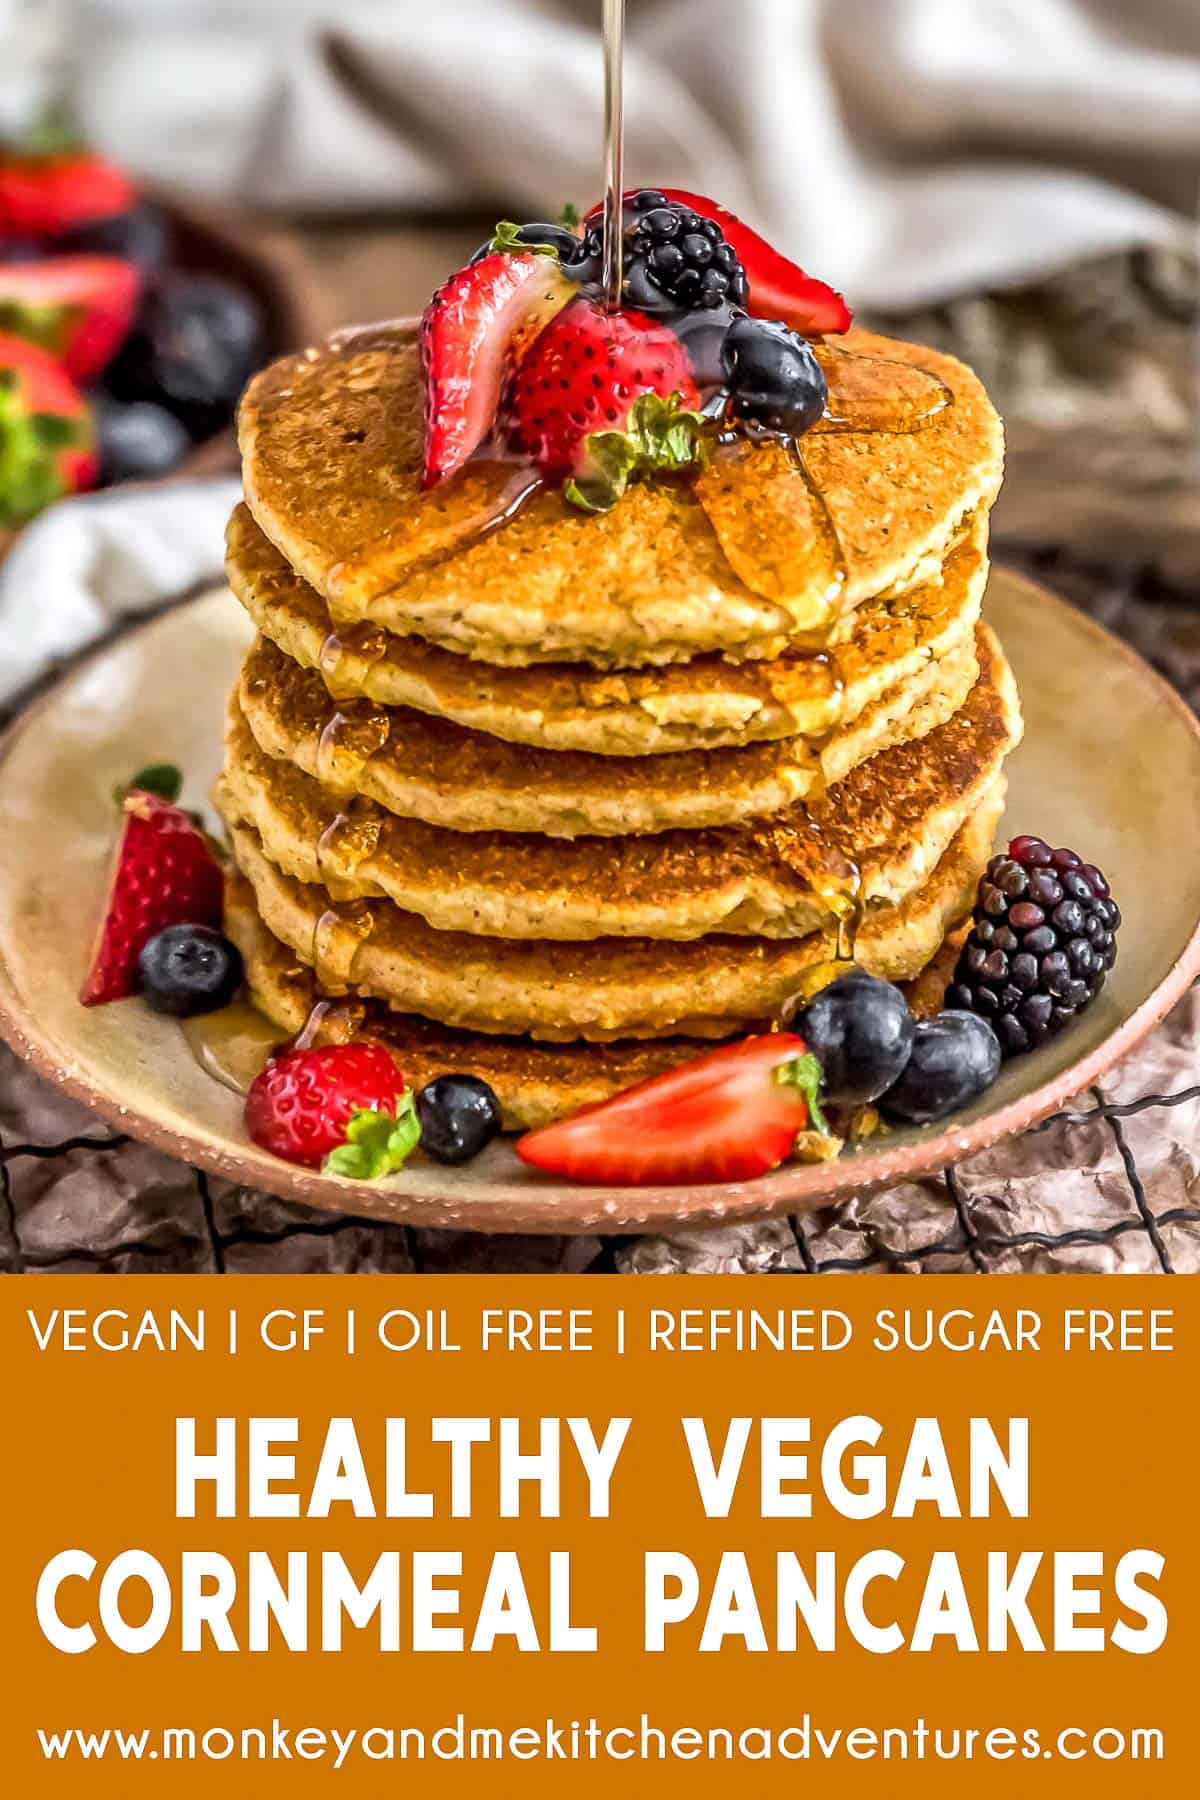 Healthy Vegan Cornmeal Pancakes with text description